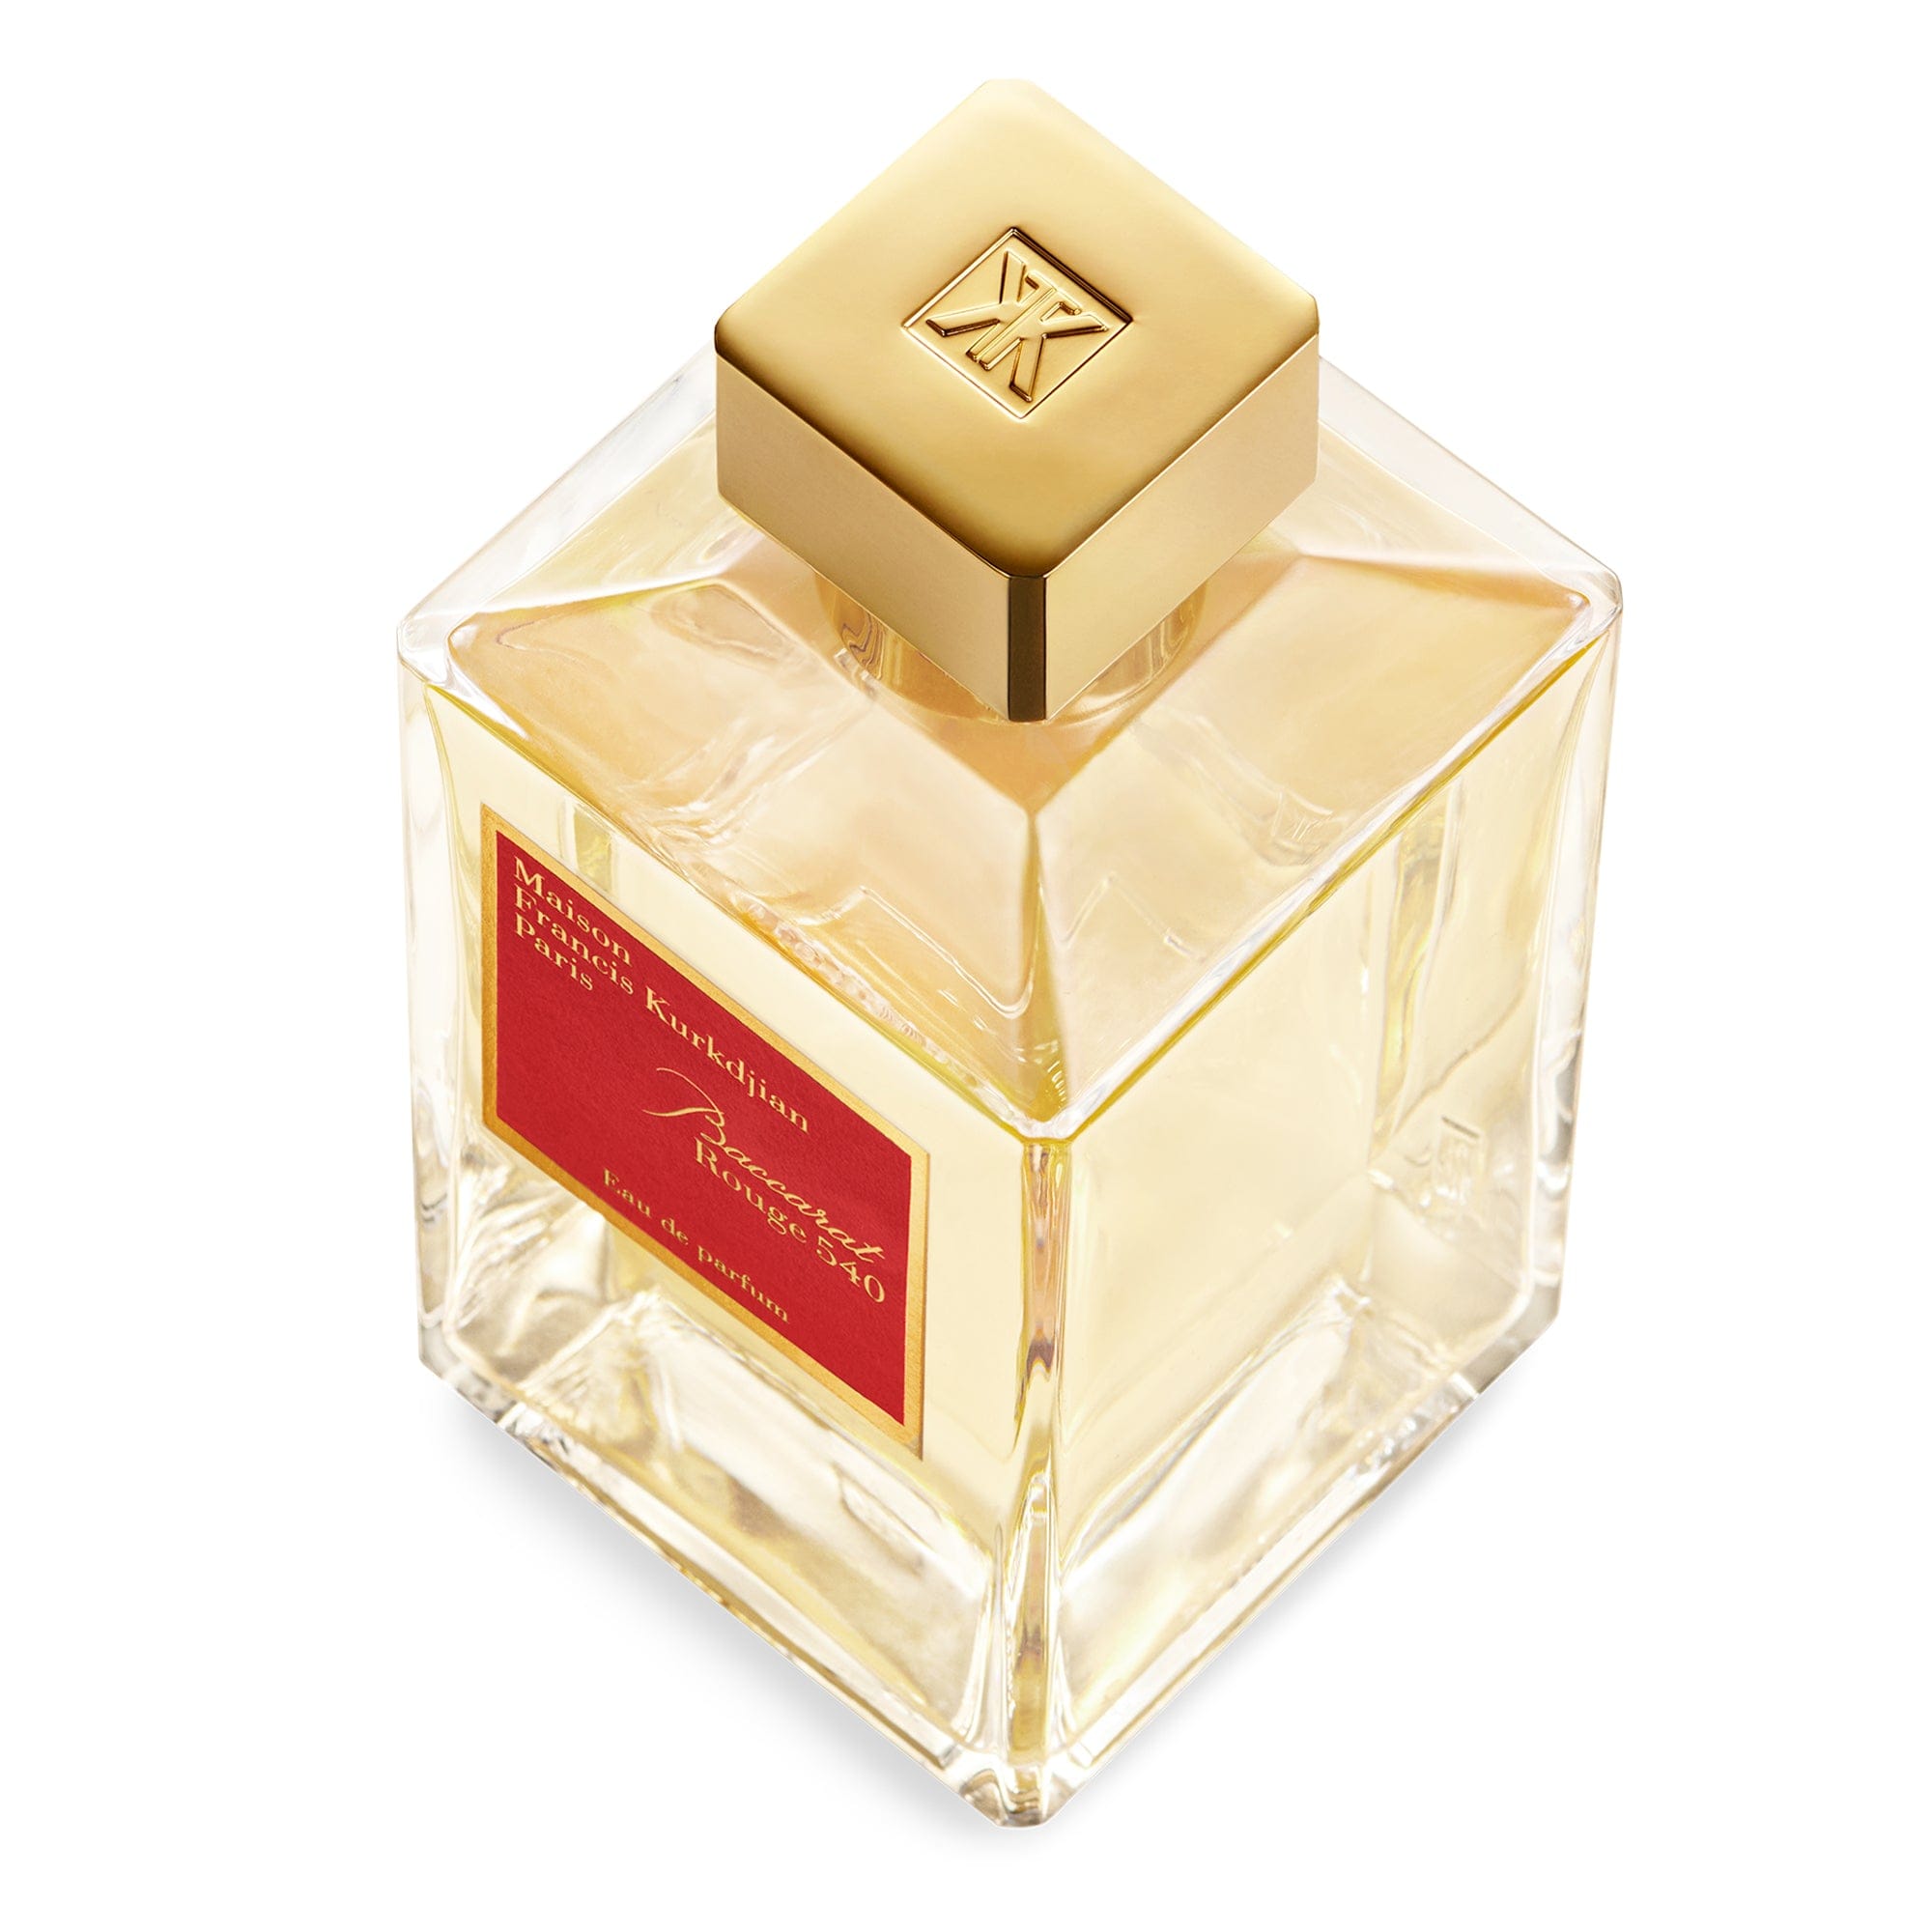 Baccarat Rouge 540 Maison Francis Kurkdjian Eau de Parfum